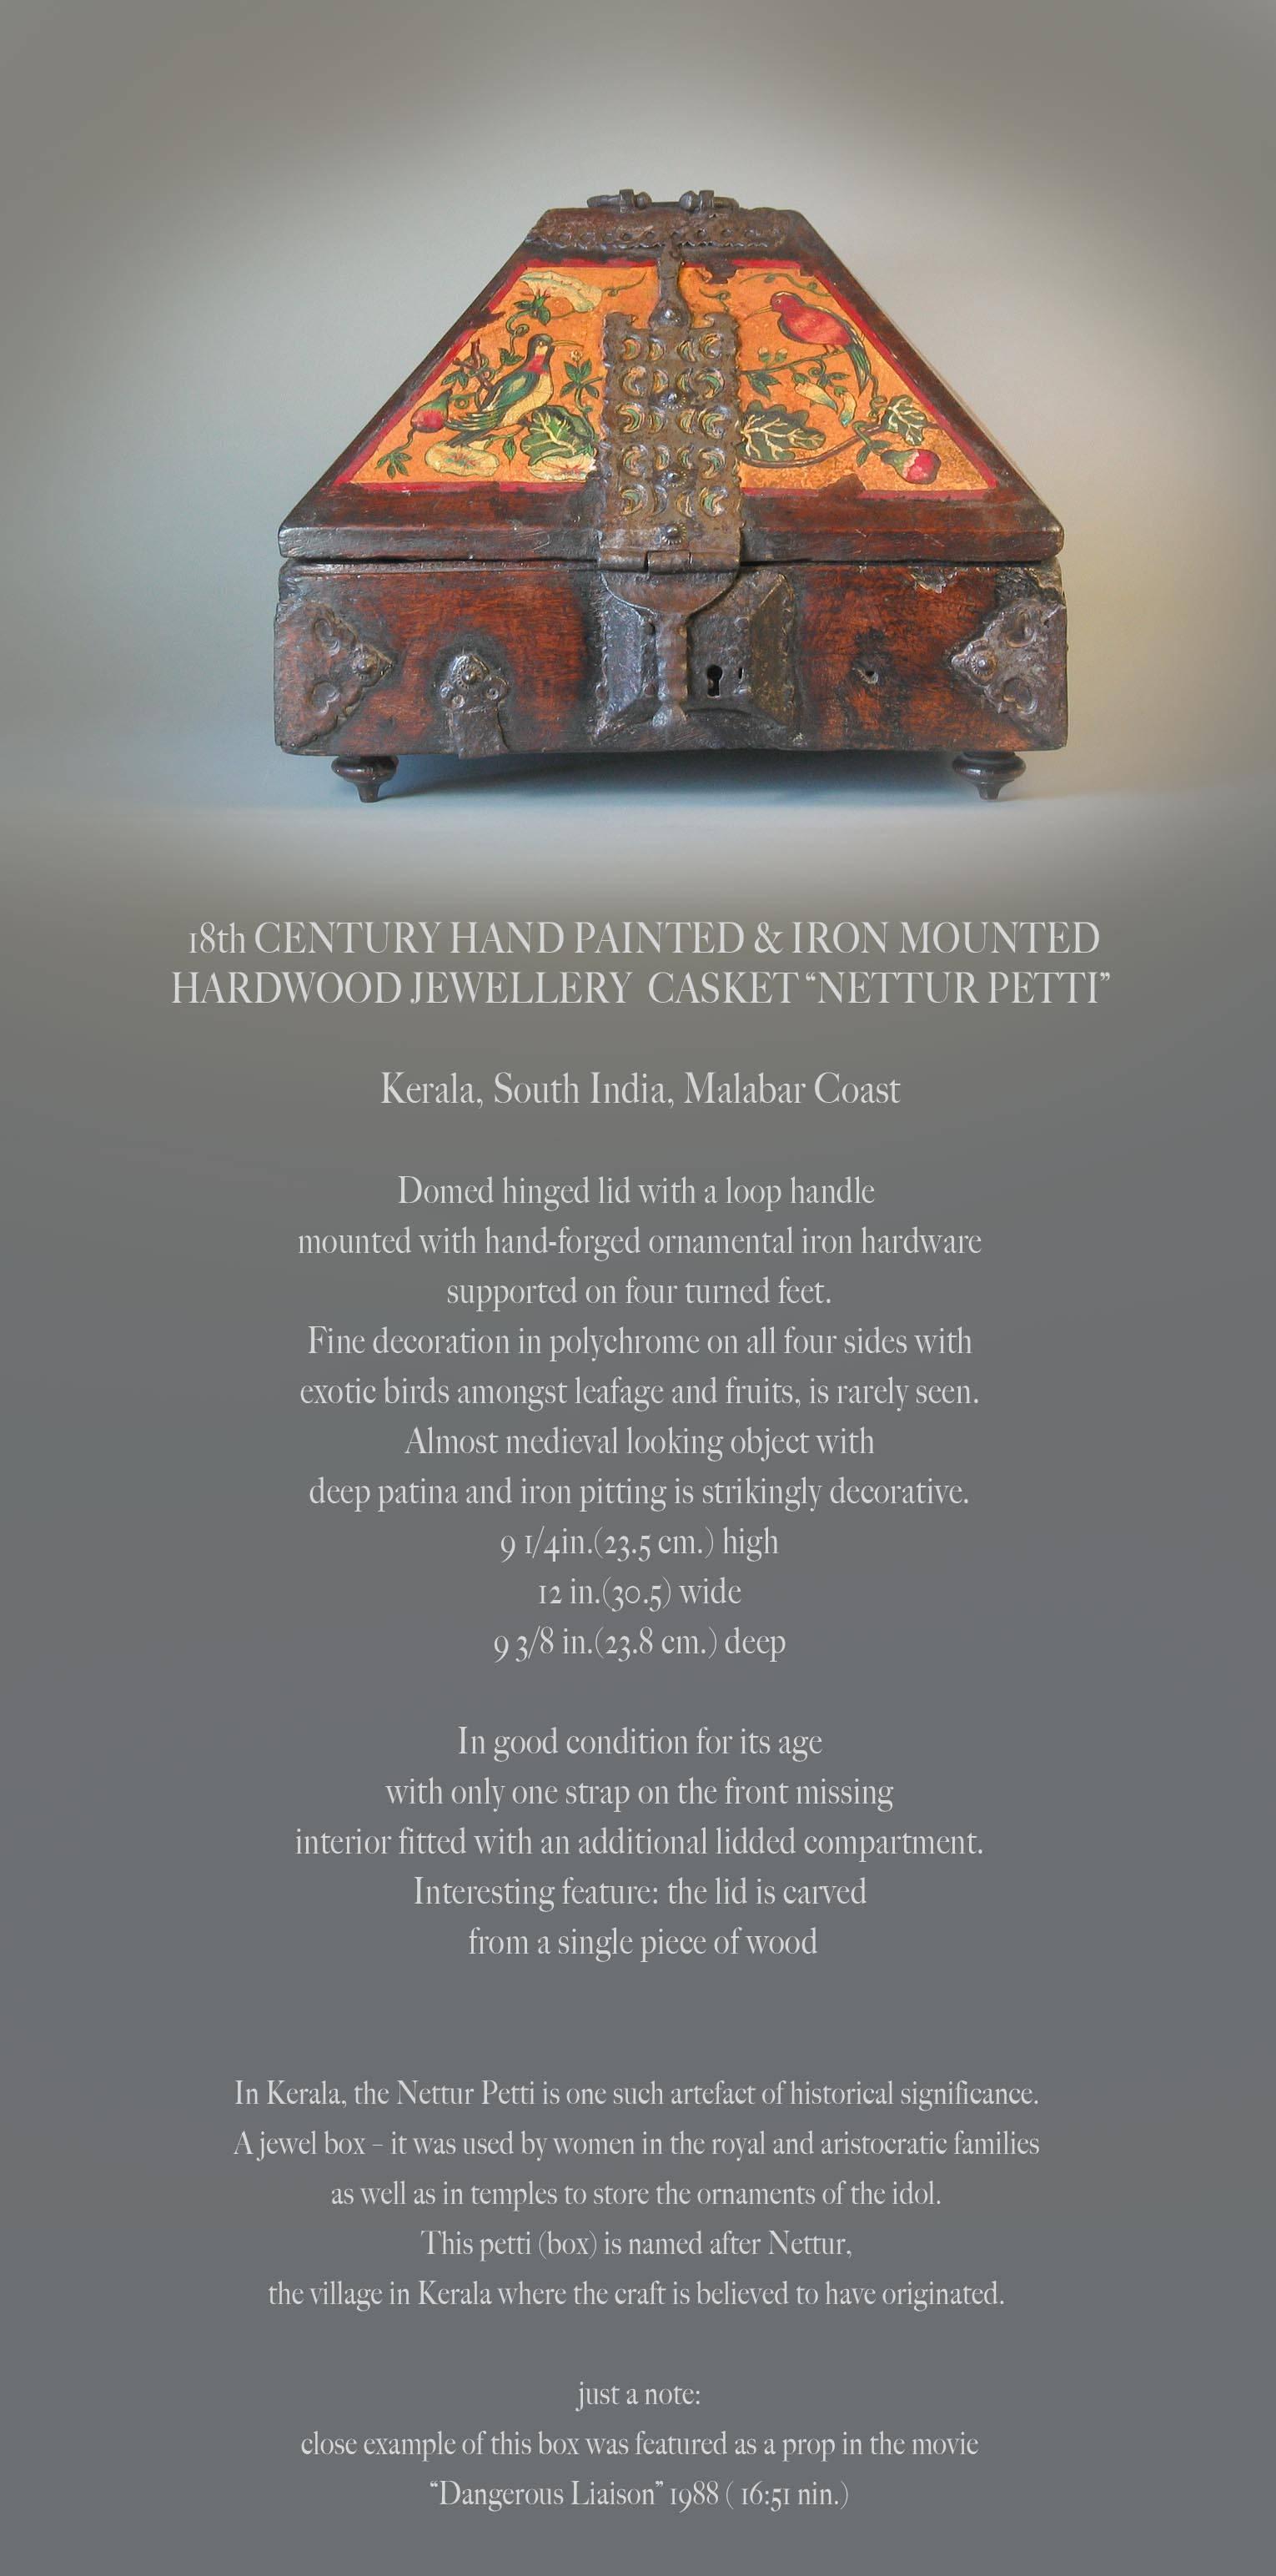 18th Century Hand-Painted & Iron Mounted Hardwood Jewelry Casket 